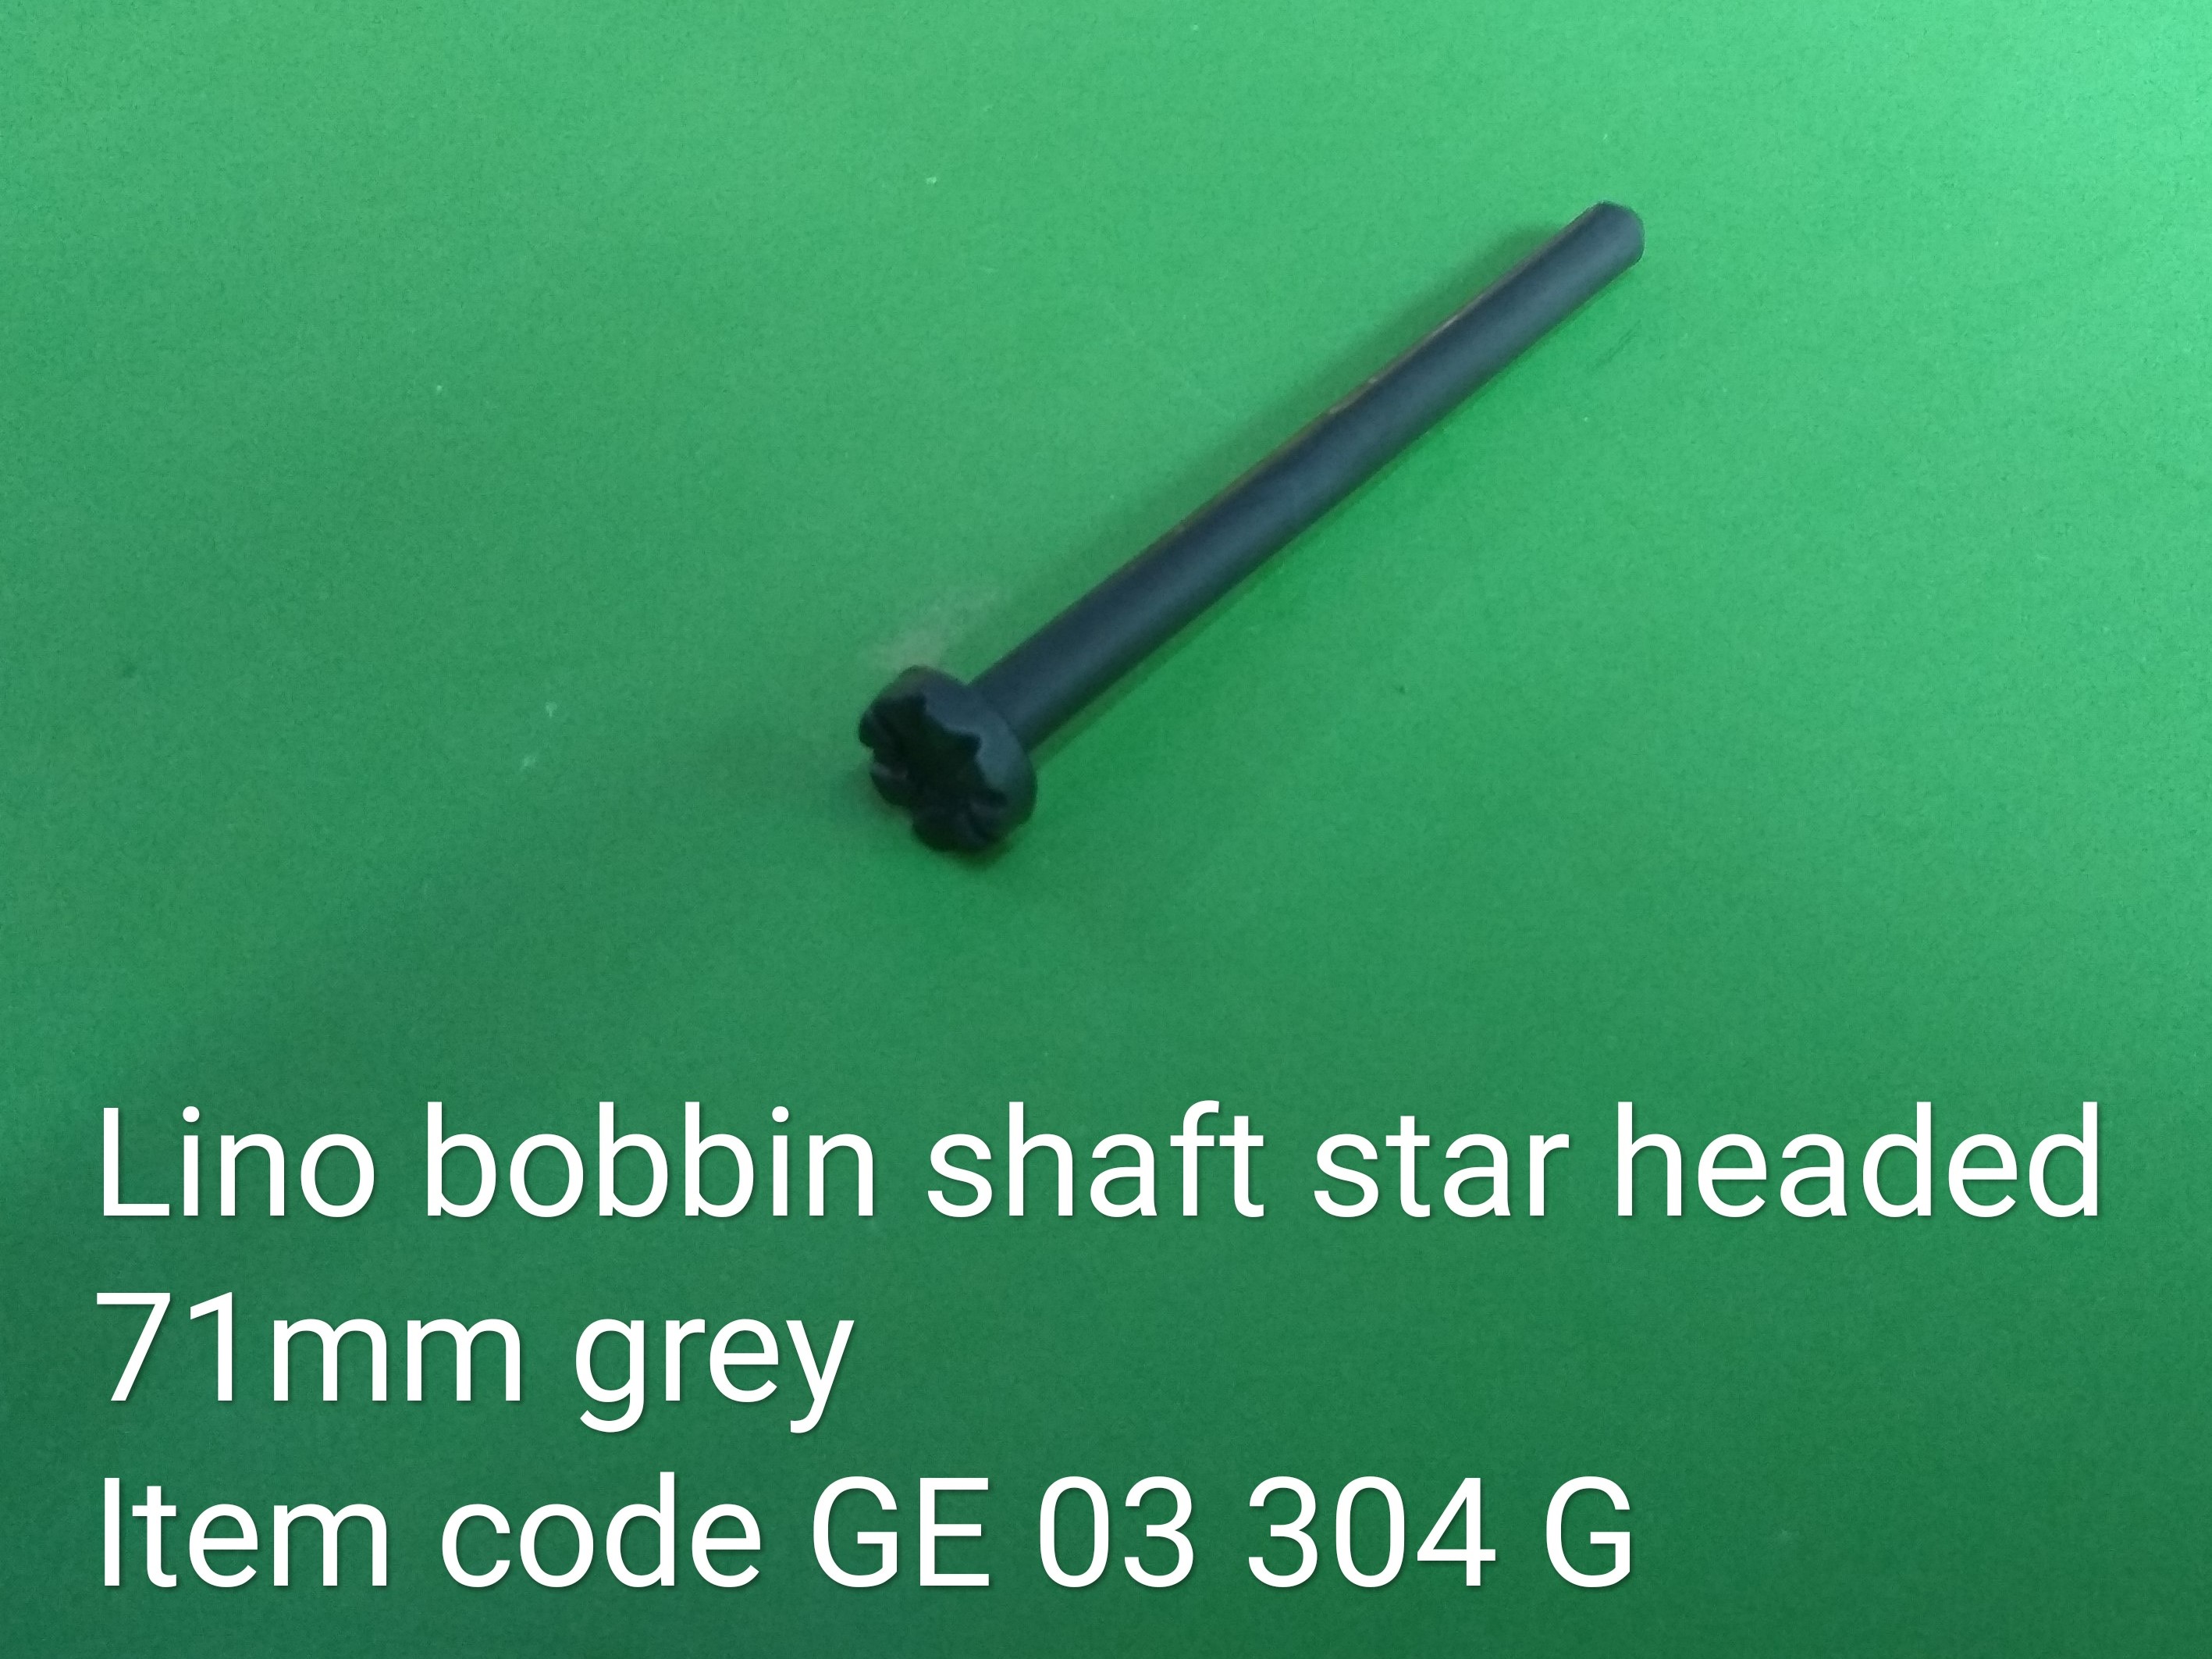 GE_03_304G_Lino_Bobbin_Shaft_Star_Headed_71mm_grey_8_69.jpg